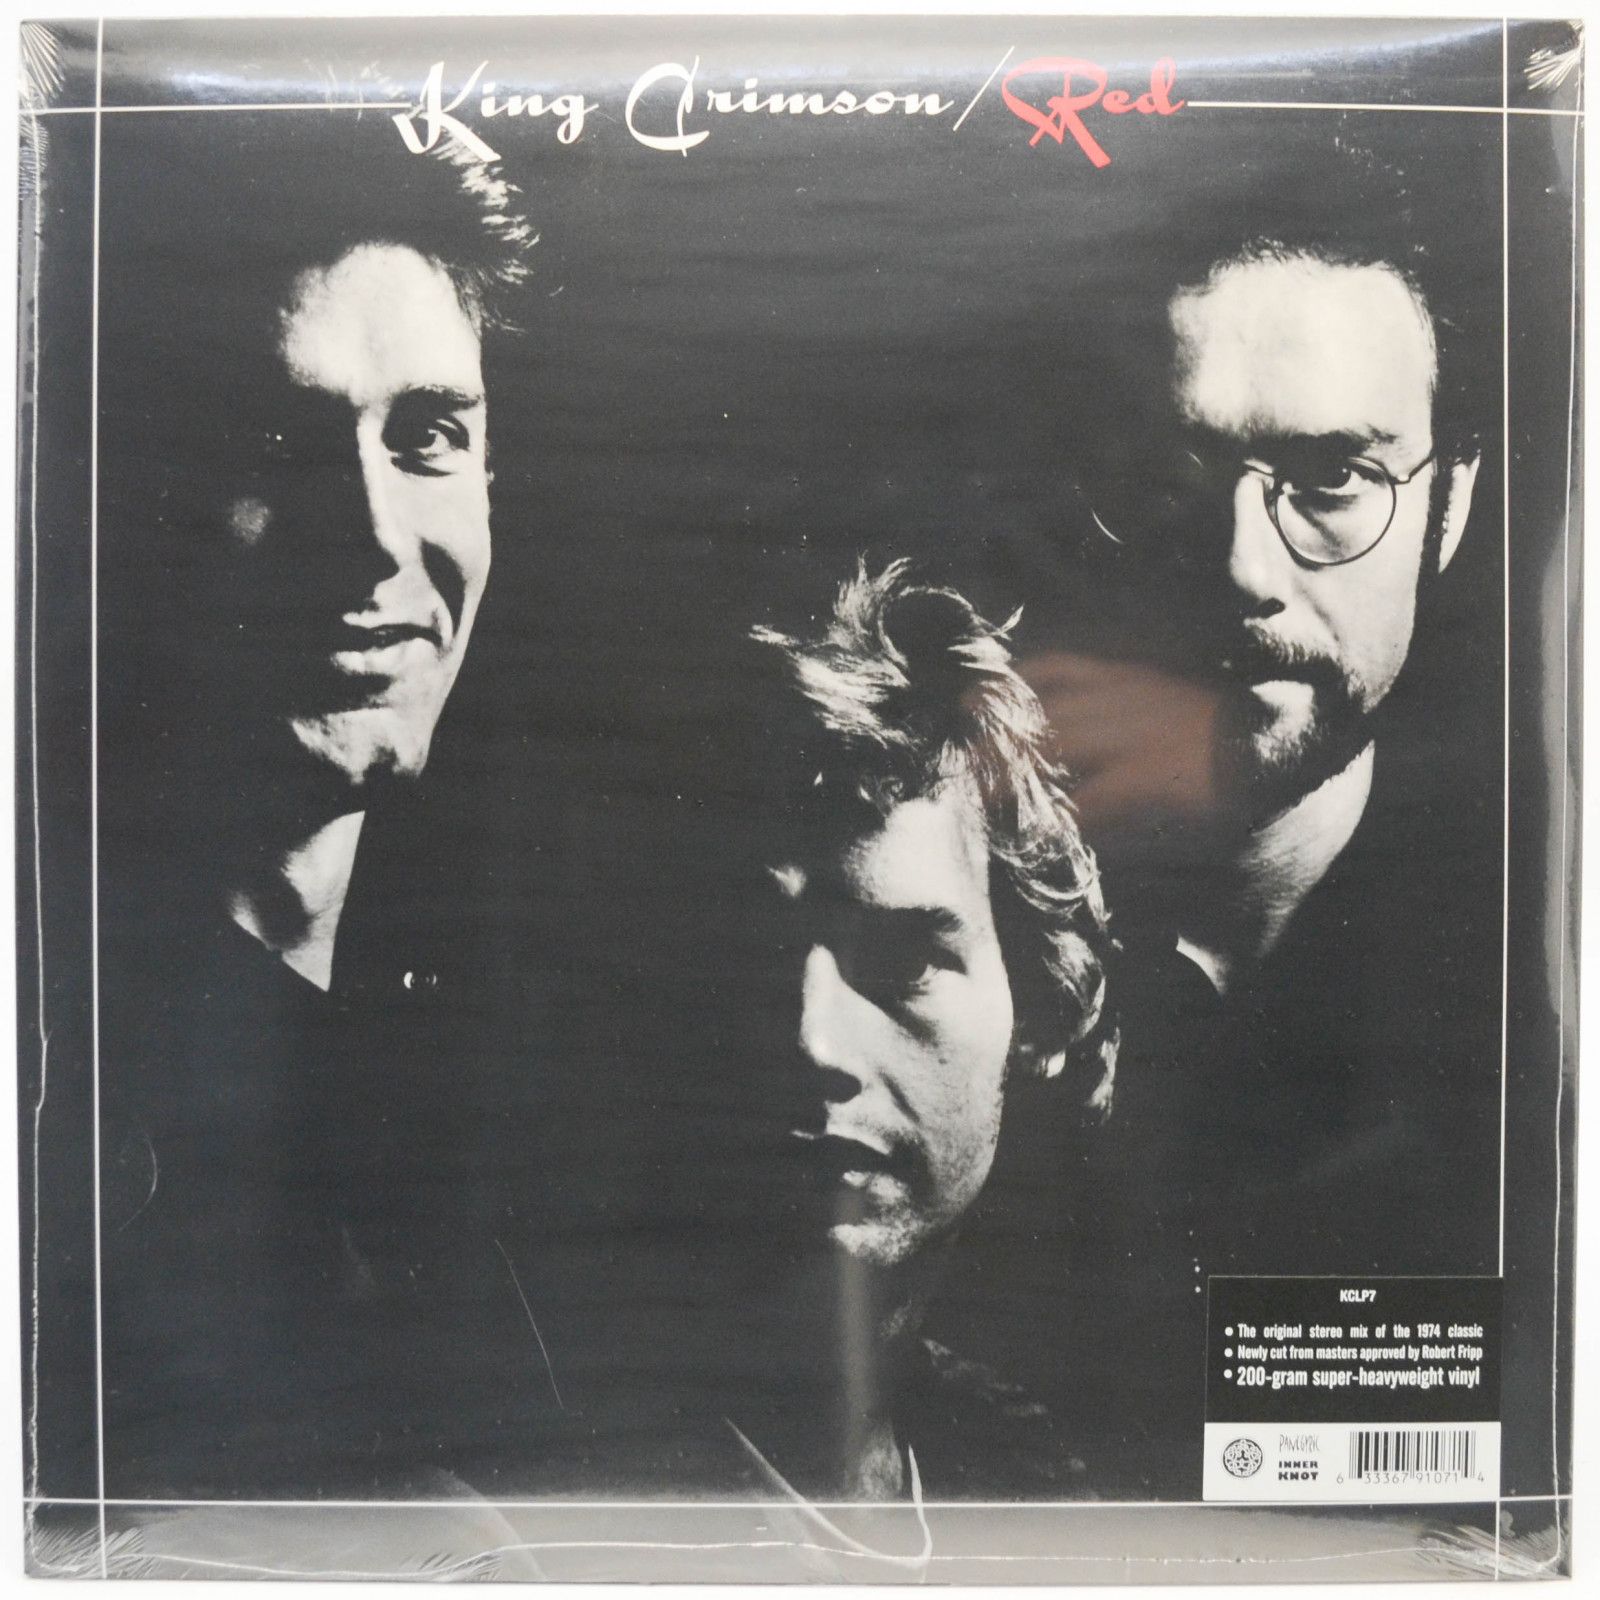 King Crimson — Red, 1974